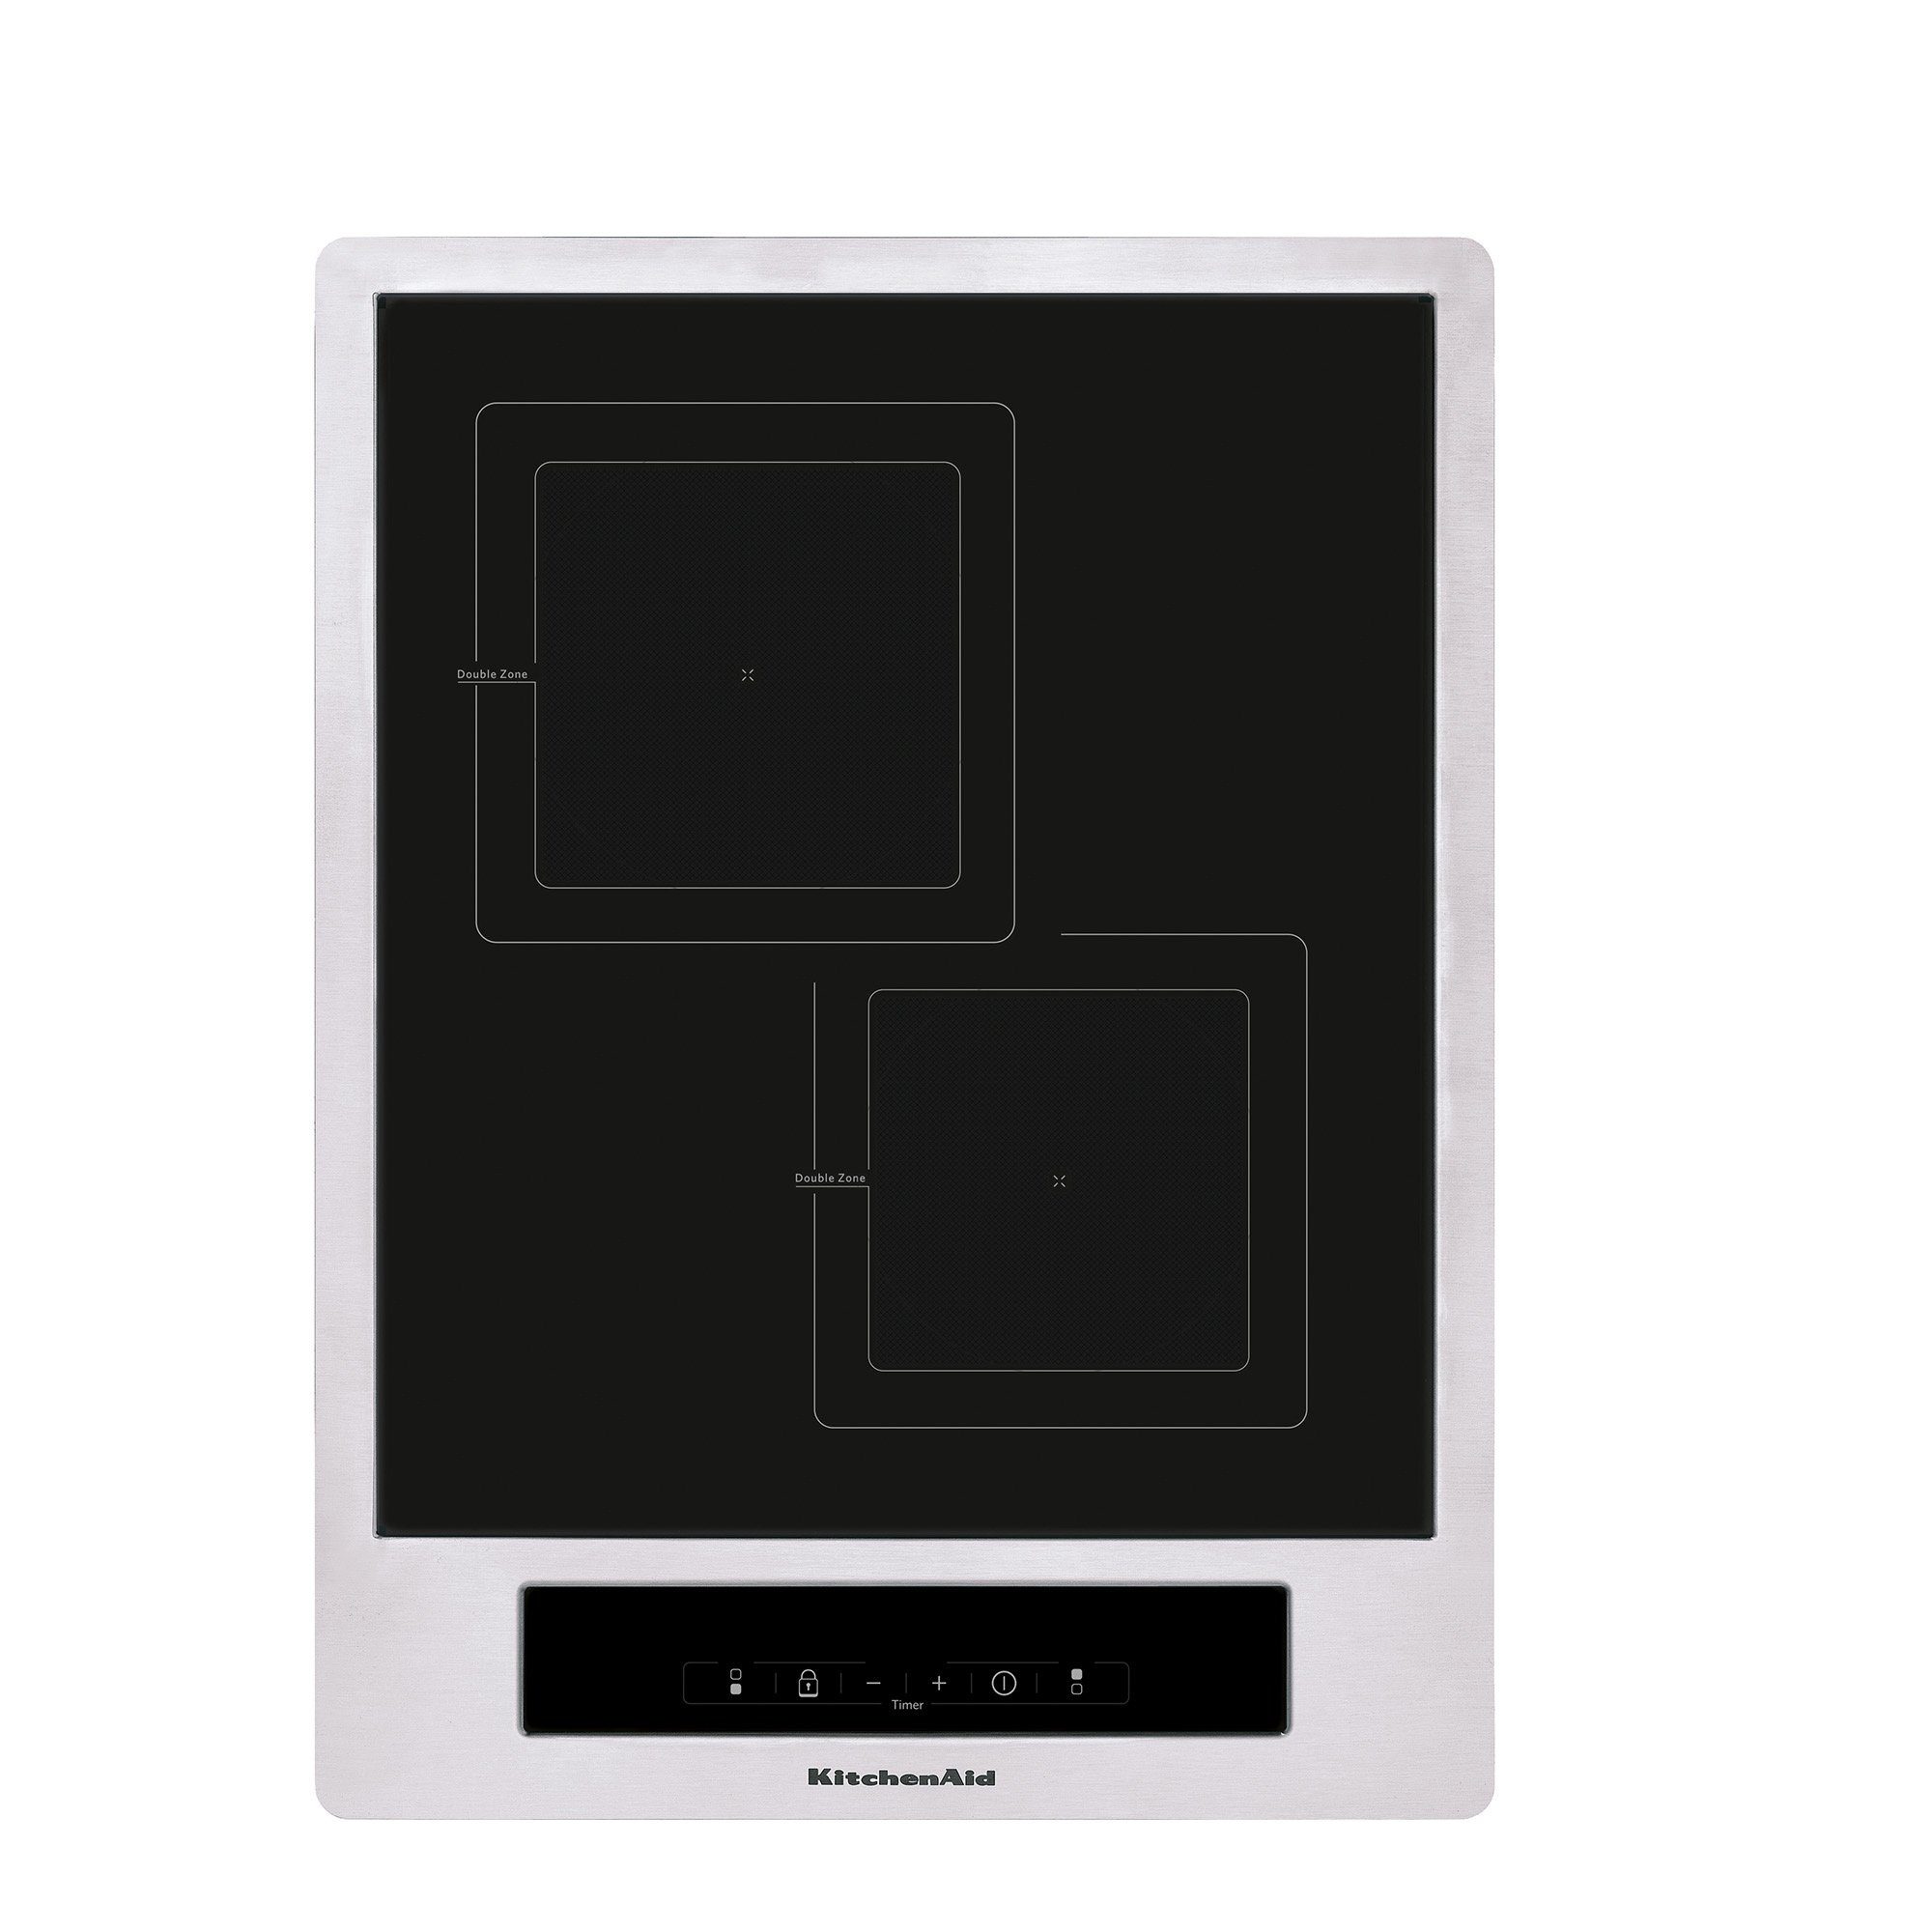 KitchenAid Induktions-Kochfeld Farbe Schwarz KHYD2 38510,  Hauptoberflächenmaterial Glas, Elektronik-Uhr, schwarz